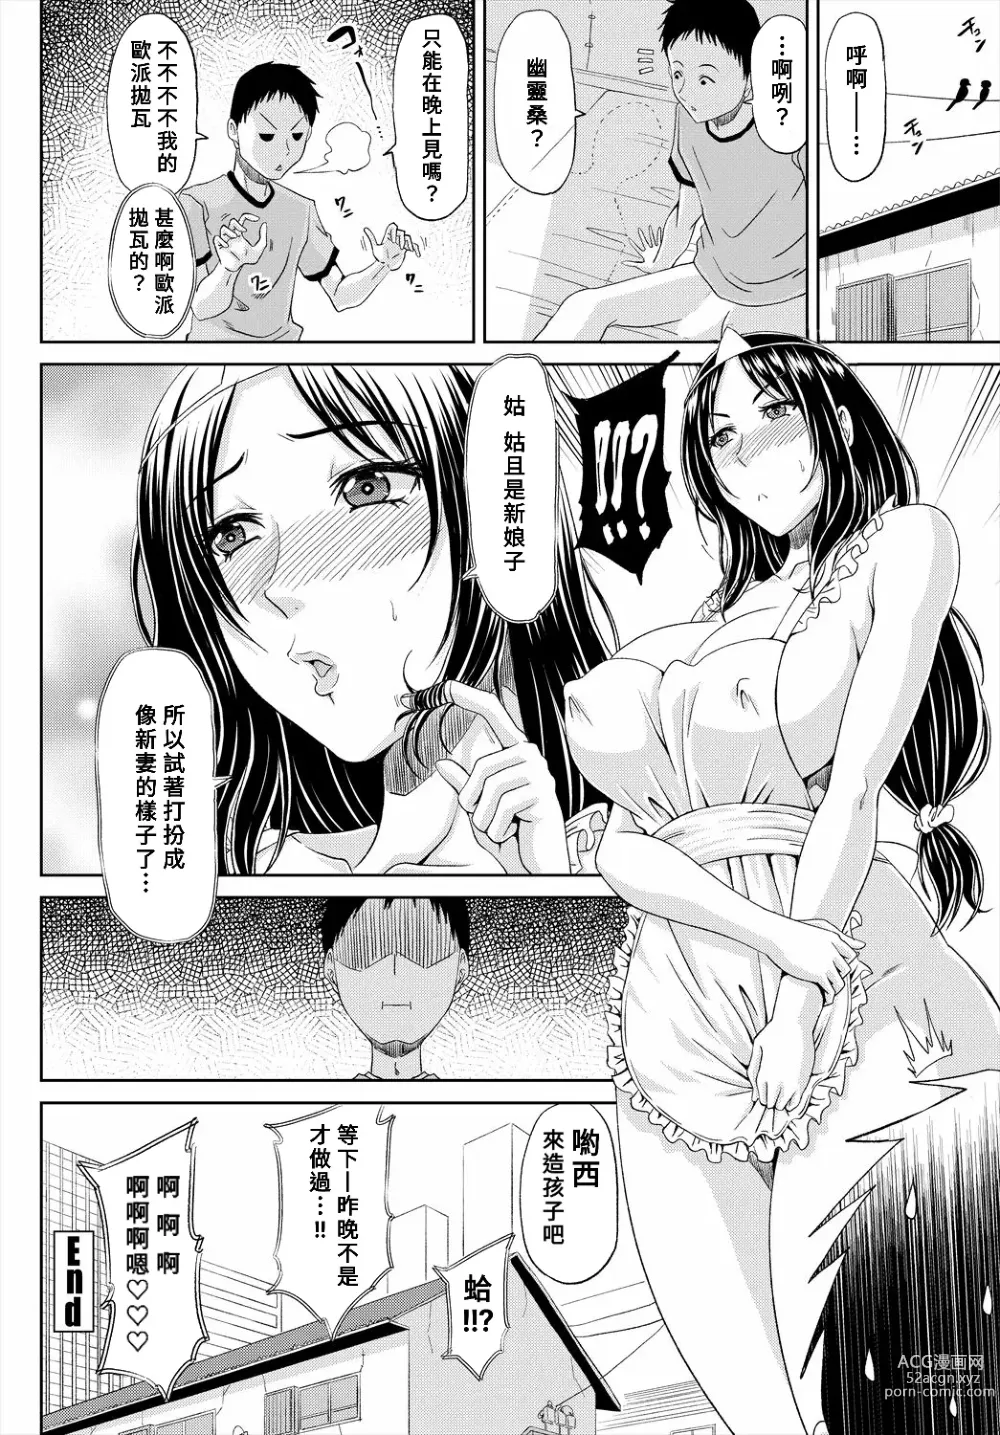 Page 20 of manga Jiko Bukken dattakedo Oppai datta